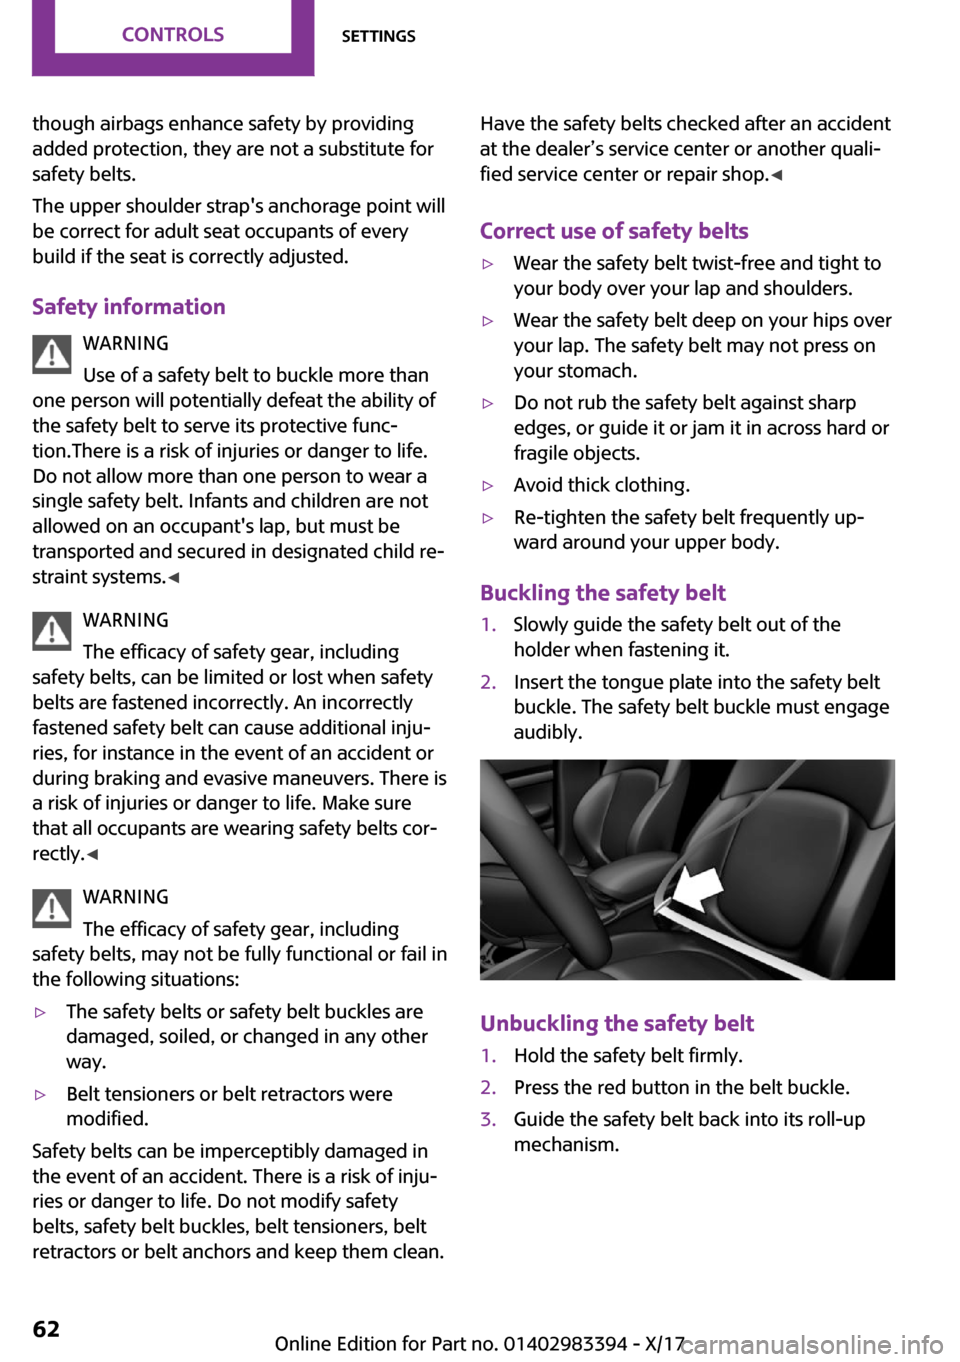 MINI Convertible 2018 Repair Manual �t�h�o�u�g�h� �a�i�r�b�a�g�s� �e�n�h�a�n�c�e� �s�a�f�e�t�y� �b�y� �p�r�o�v�i�d�i�n�g�a�d�d�e�d� �p�r�o�t�e�c�t�i�o�n�,� �t�h�e�y� �a�r�e� �n�o�t� �a� �s�u�b�s�t�i�t�u�t�e� �f�o�r�s�a�f�e�t�y� �b�e�l�t